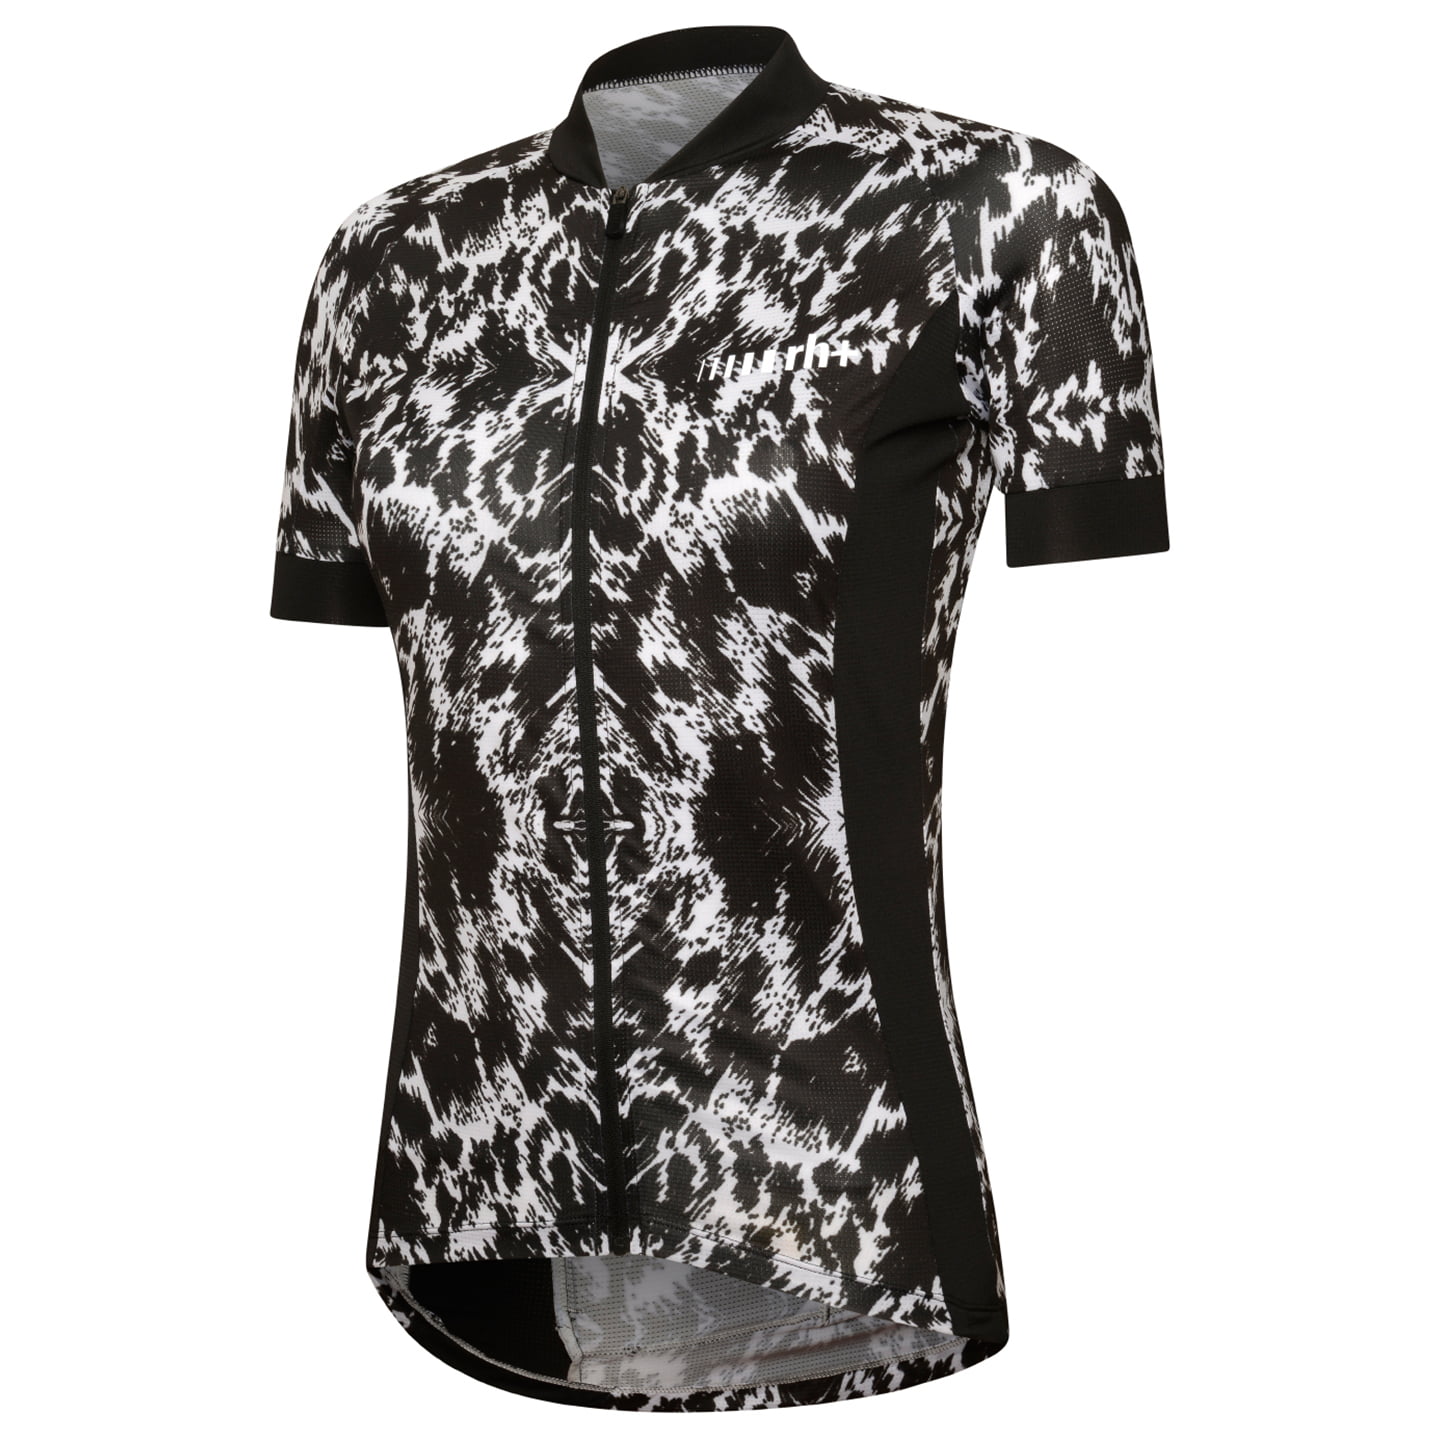 RH+ Venere Women’s Jersey Women’s Short Sleeve Jersey, size L, Cycling jersey, Cycling clothing